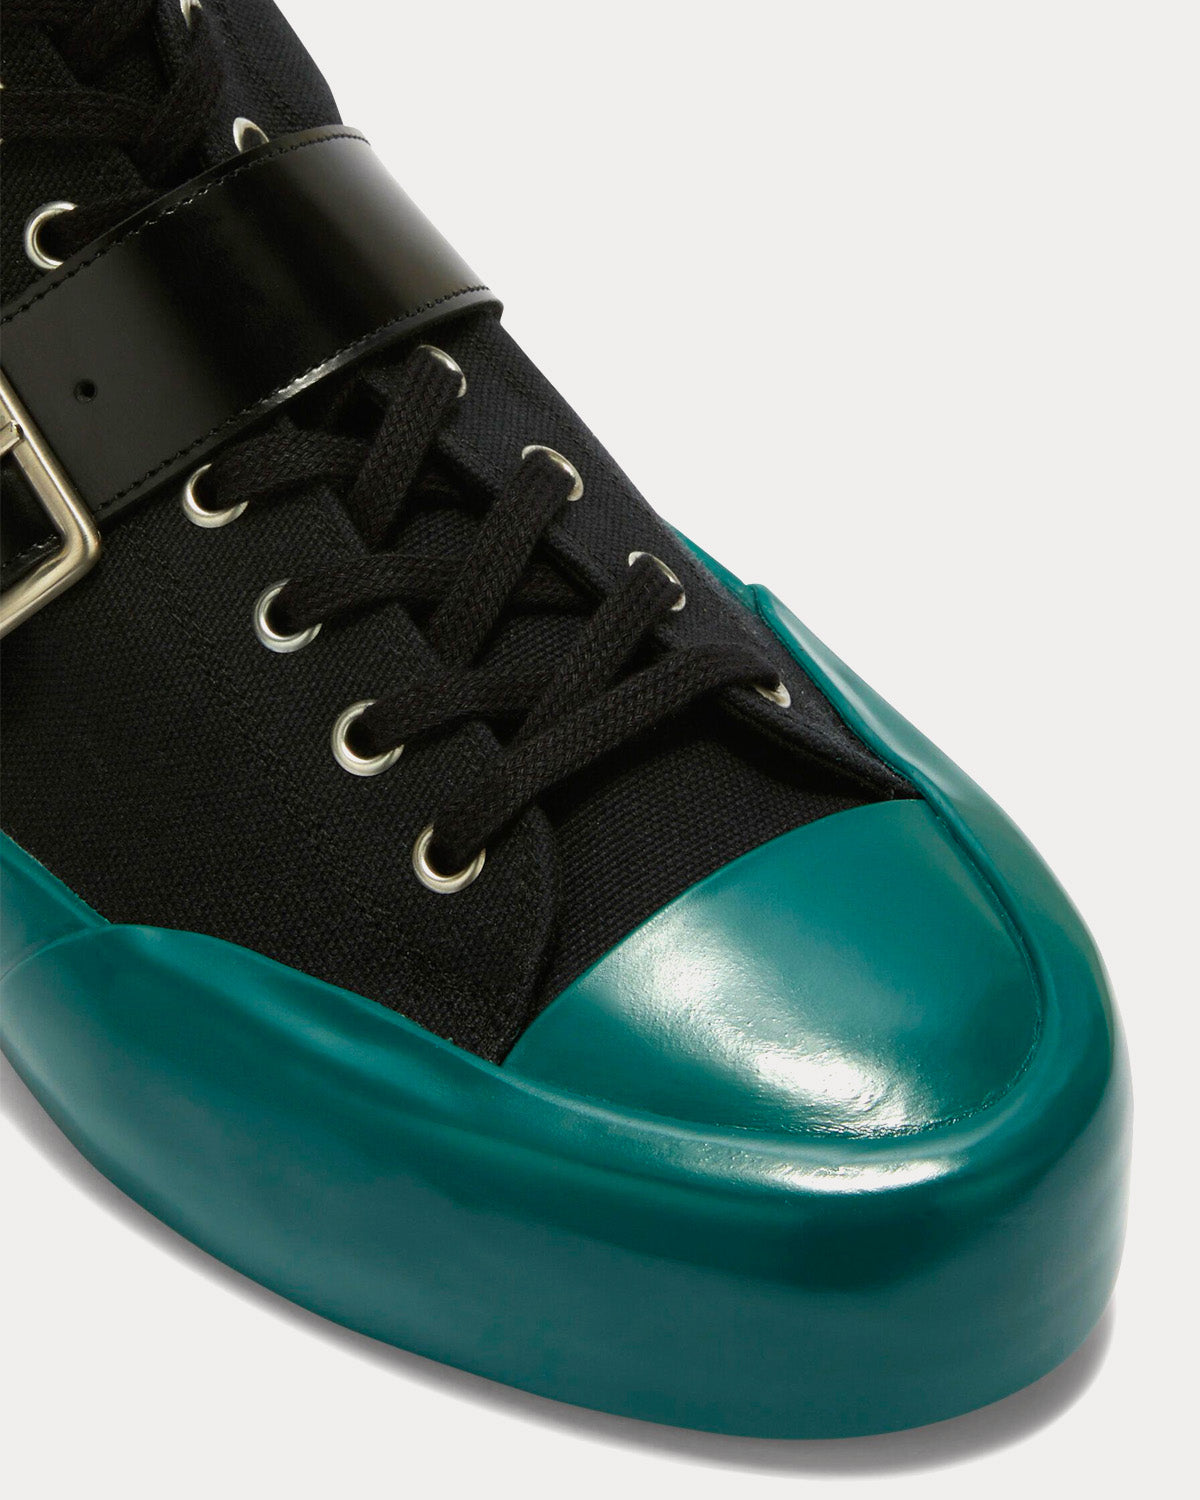 Jil Sander - Vulcanised Rubber & Canvas Buckle Black / Turquoise High Top Sneakers